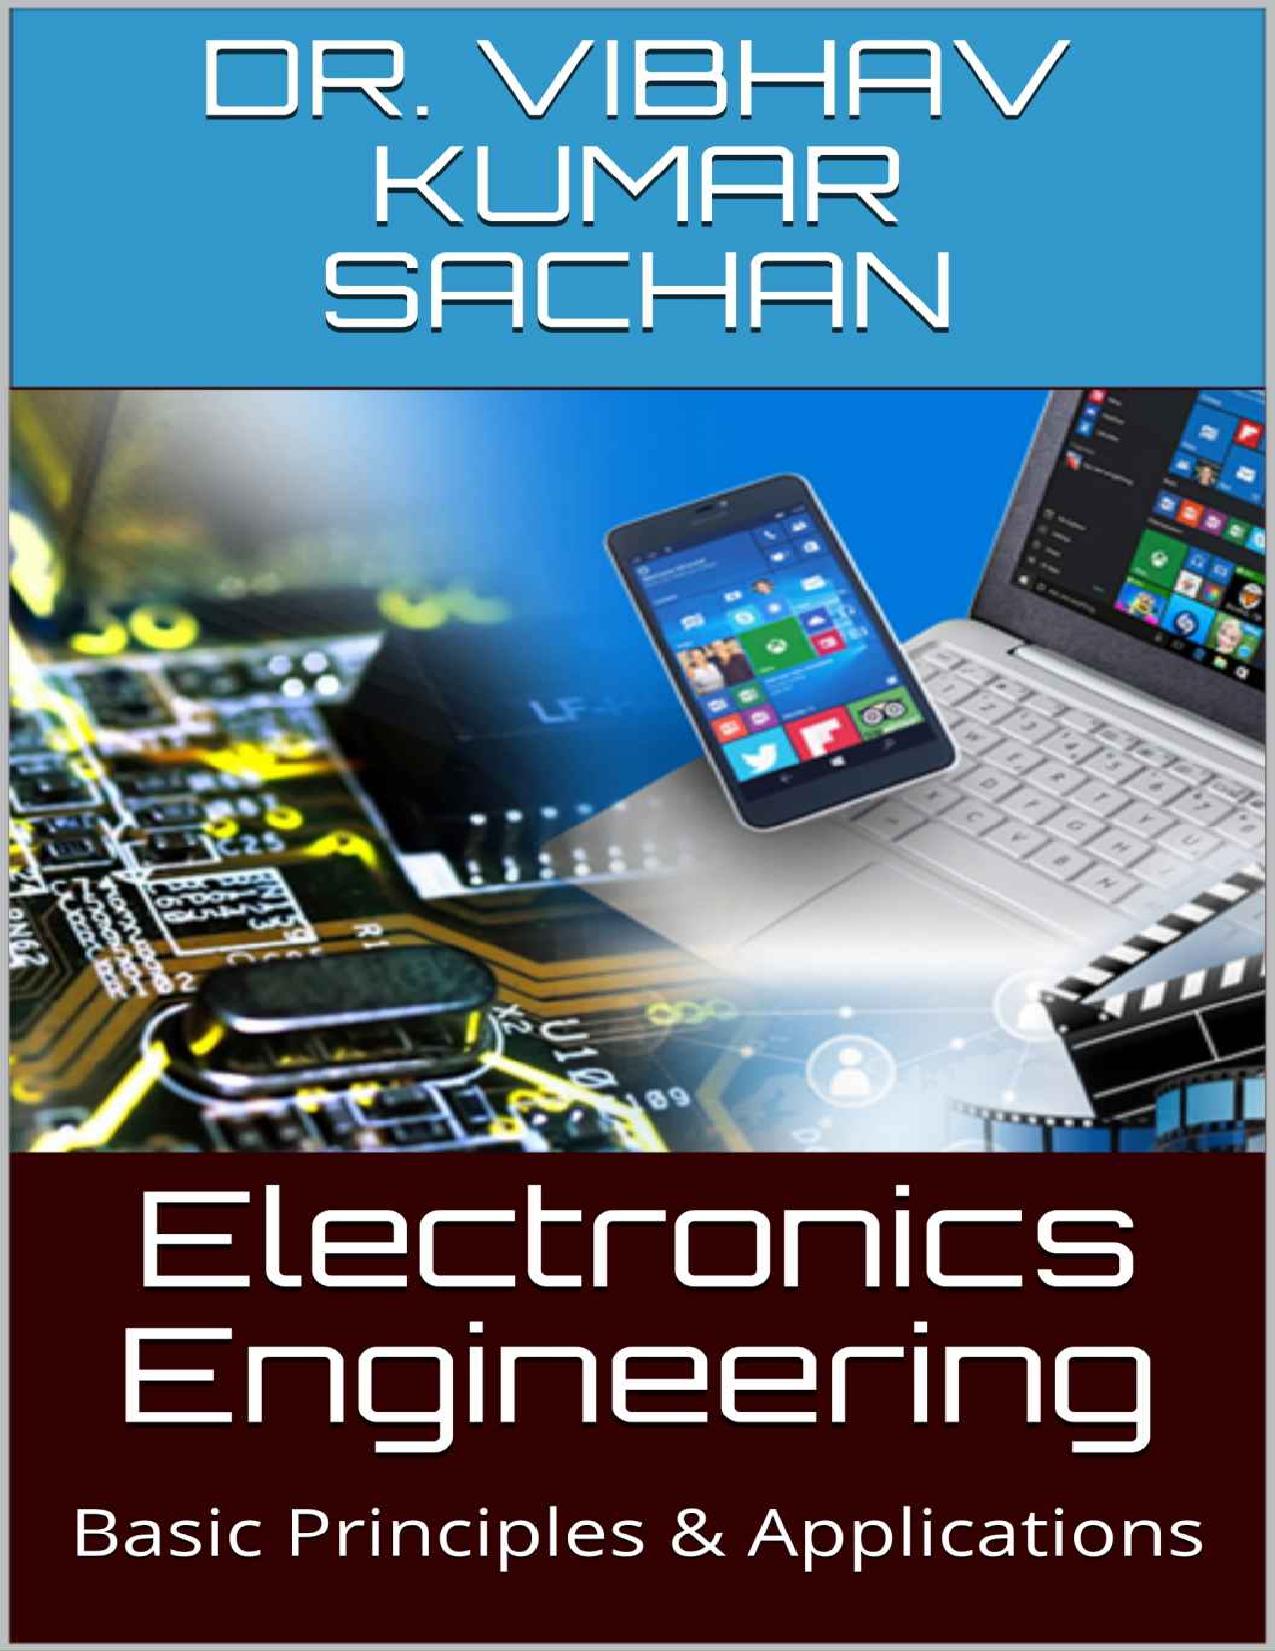 Electronics Engineering: Basic Principles & Applications (Sachan Book 13) by Dr. Vibhav Kumar Sachan